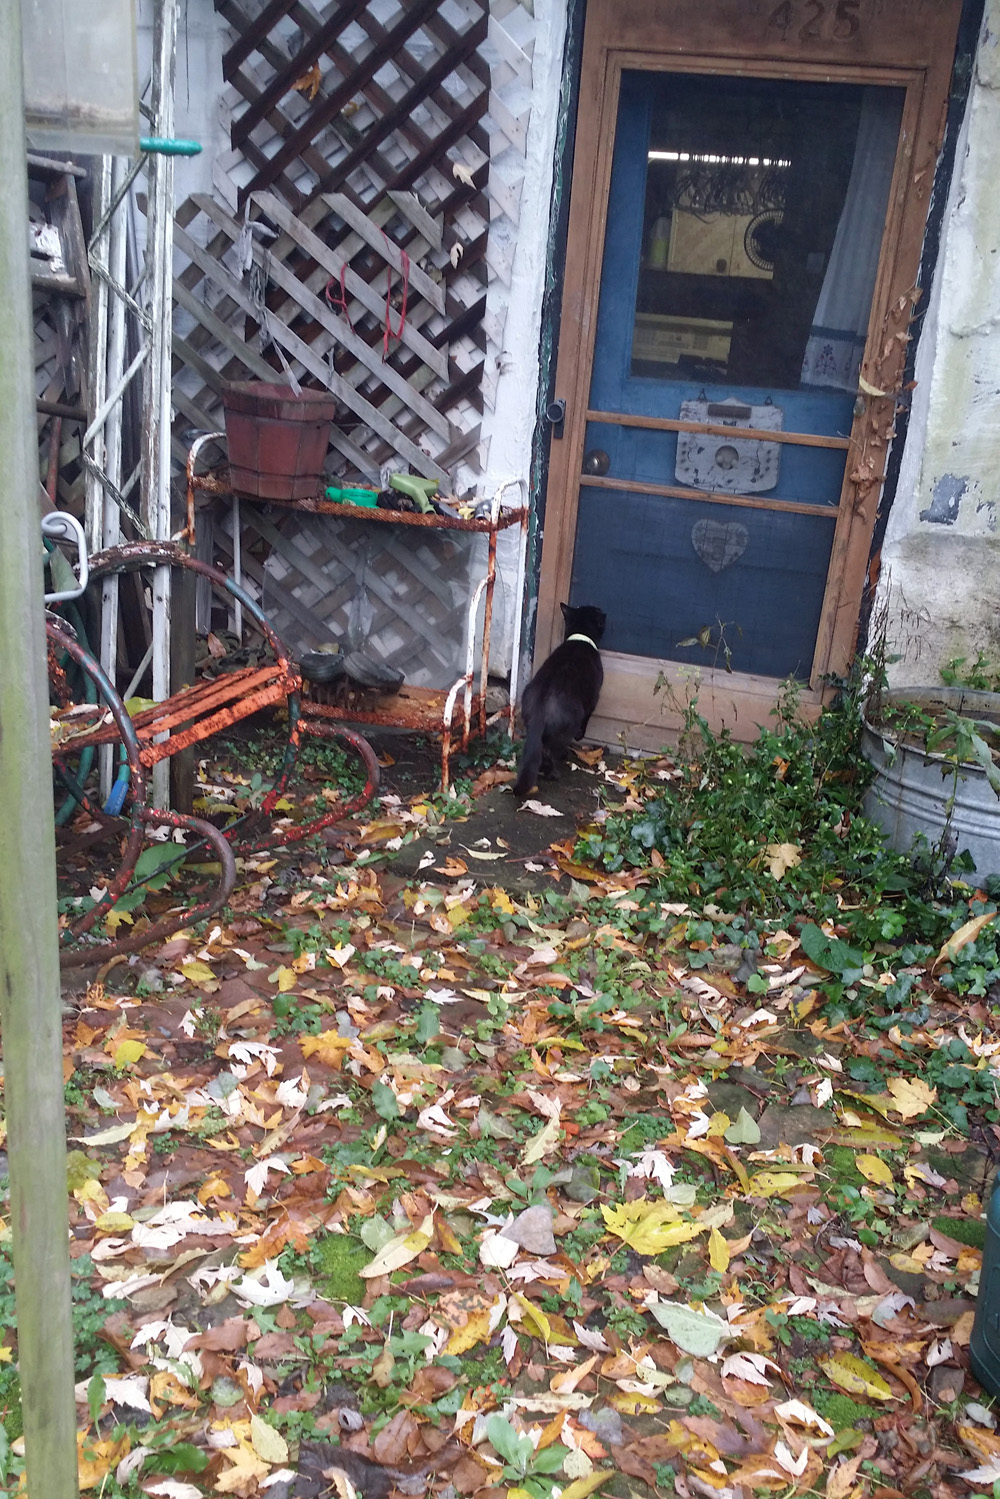 black cat in yard